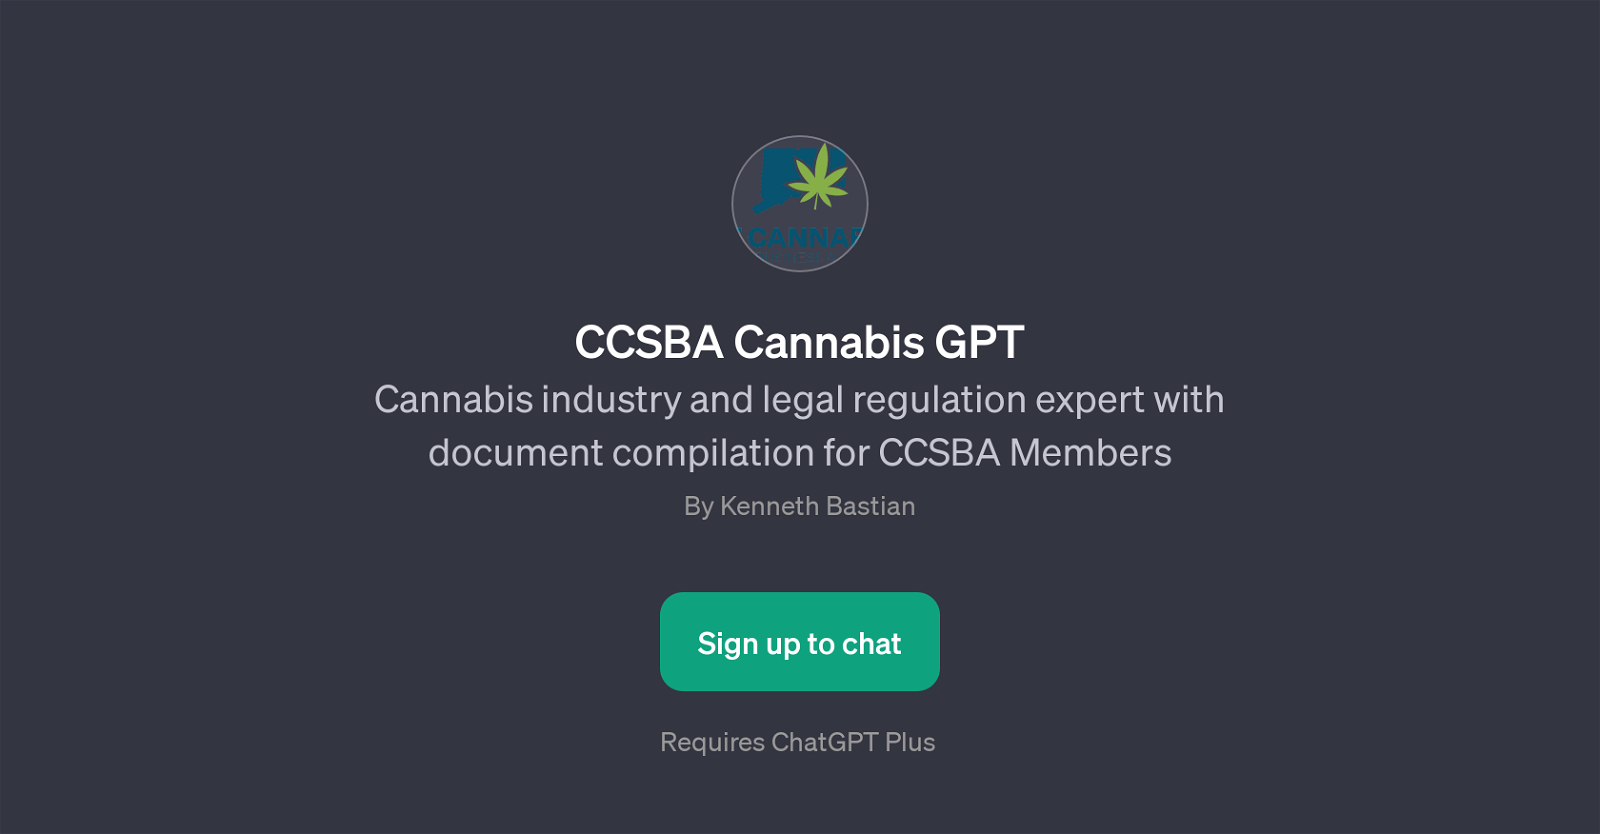 CCSBA Cannabis GPT website